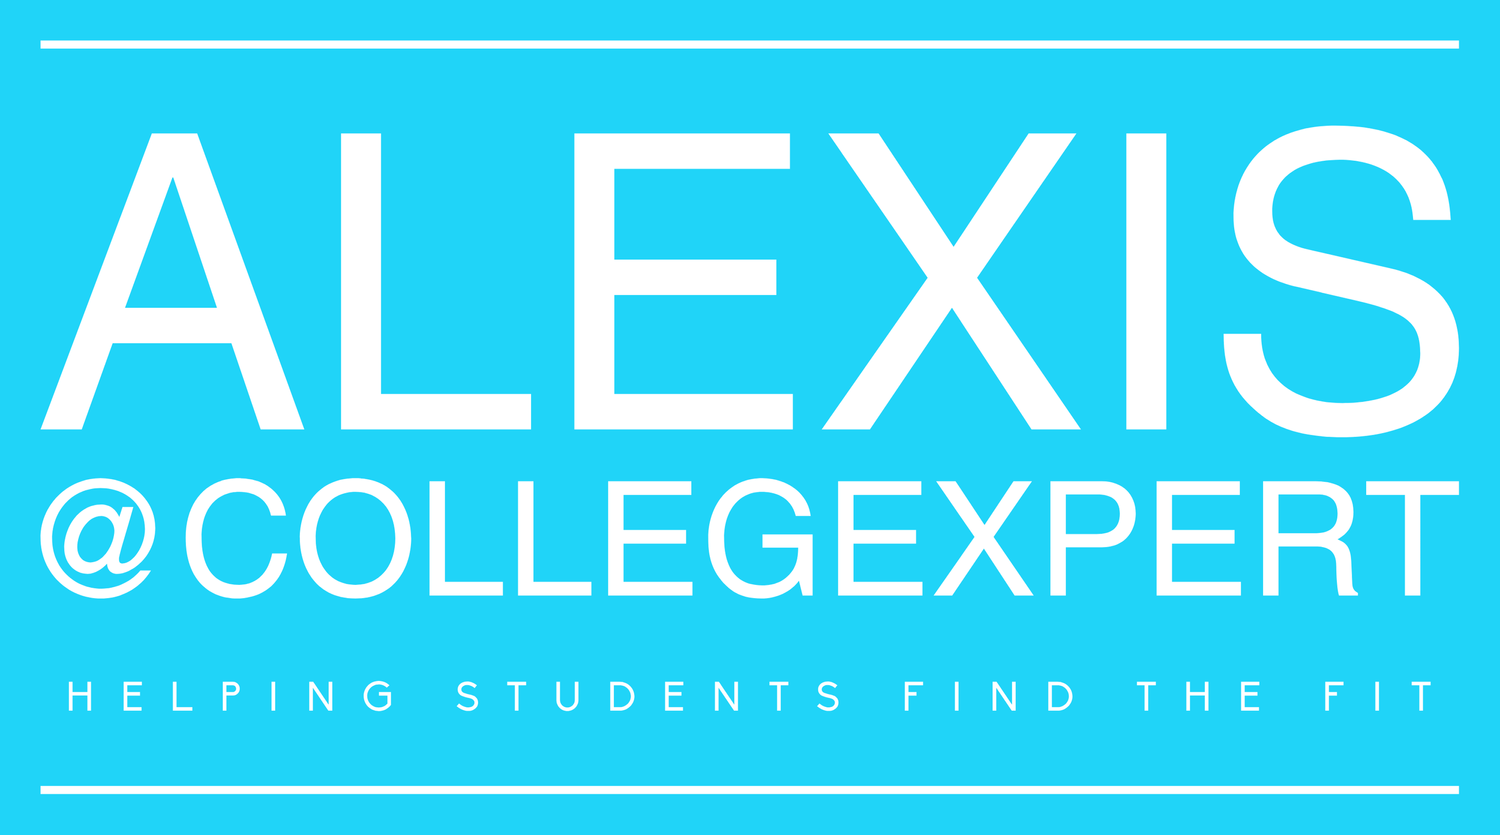 Alexis College Expert